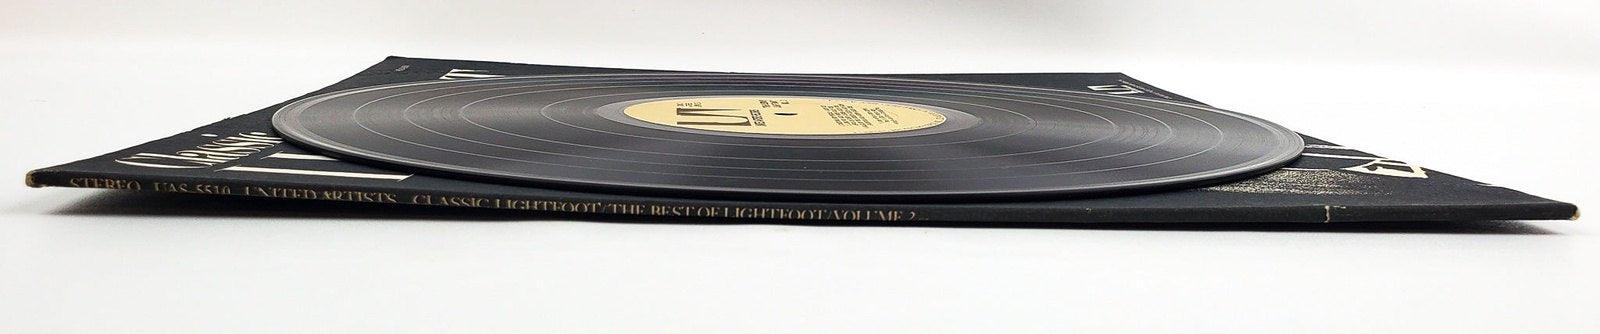 Gordon Lightfoot Classic Gordon Lightfoot Vol 2 Record 33 RPM LP 1971 5